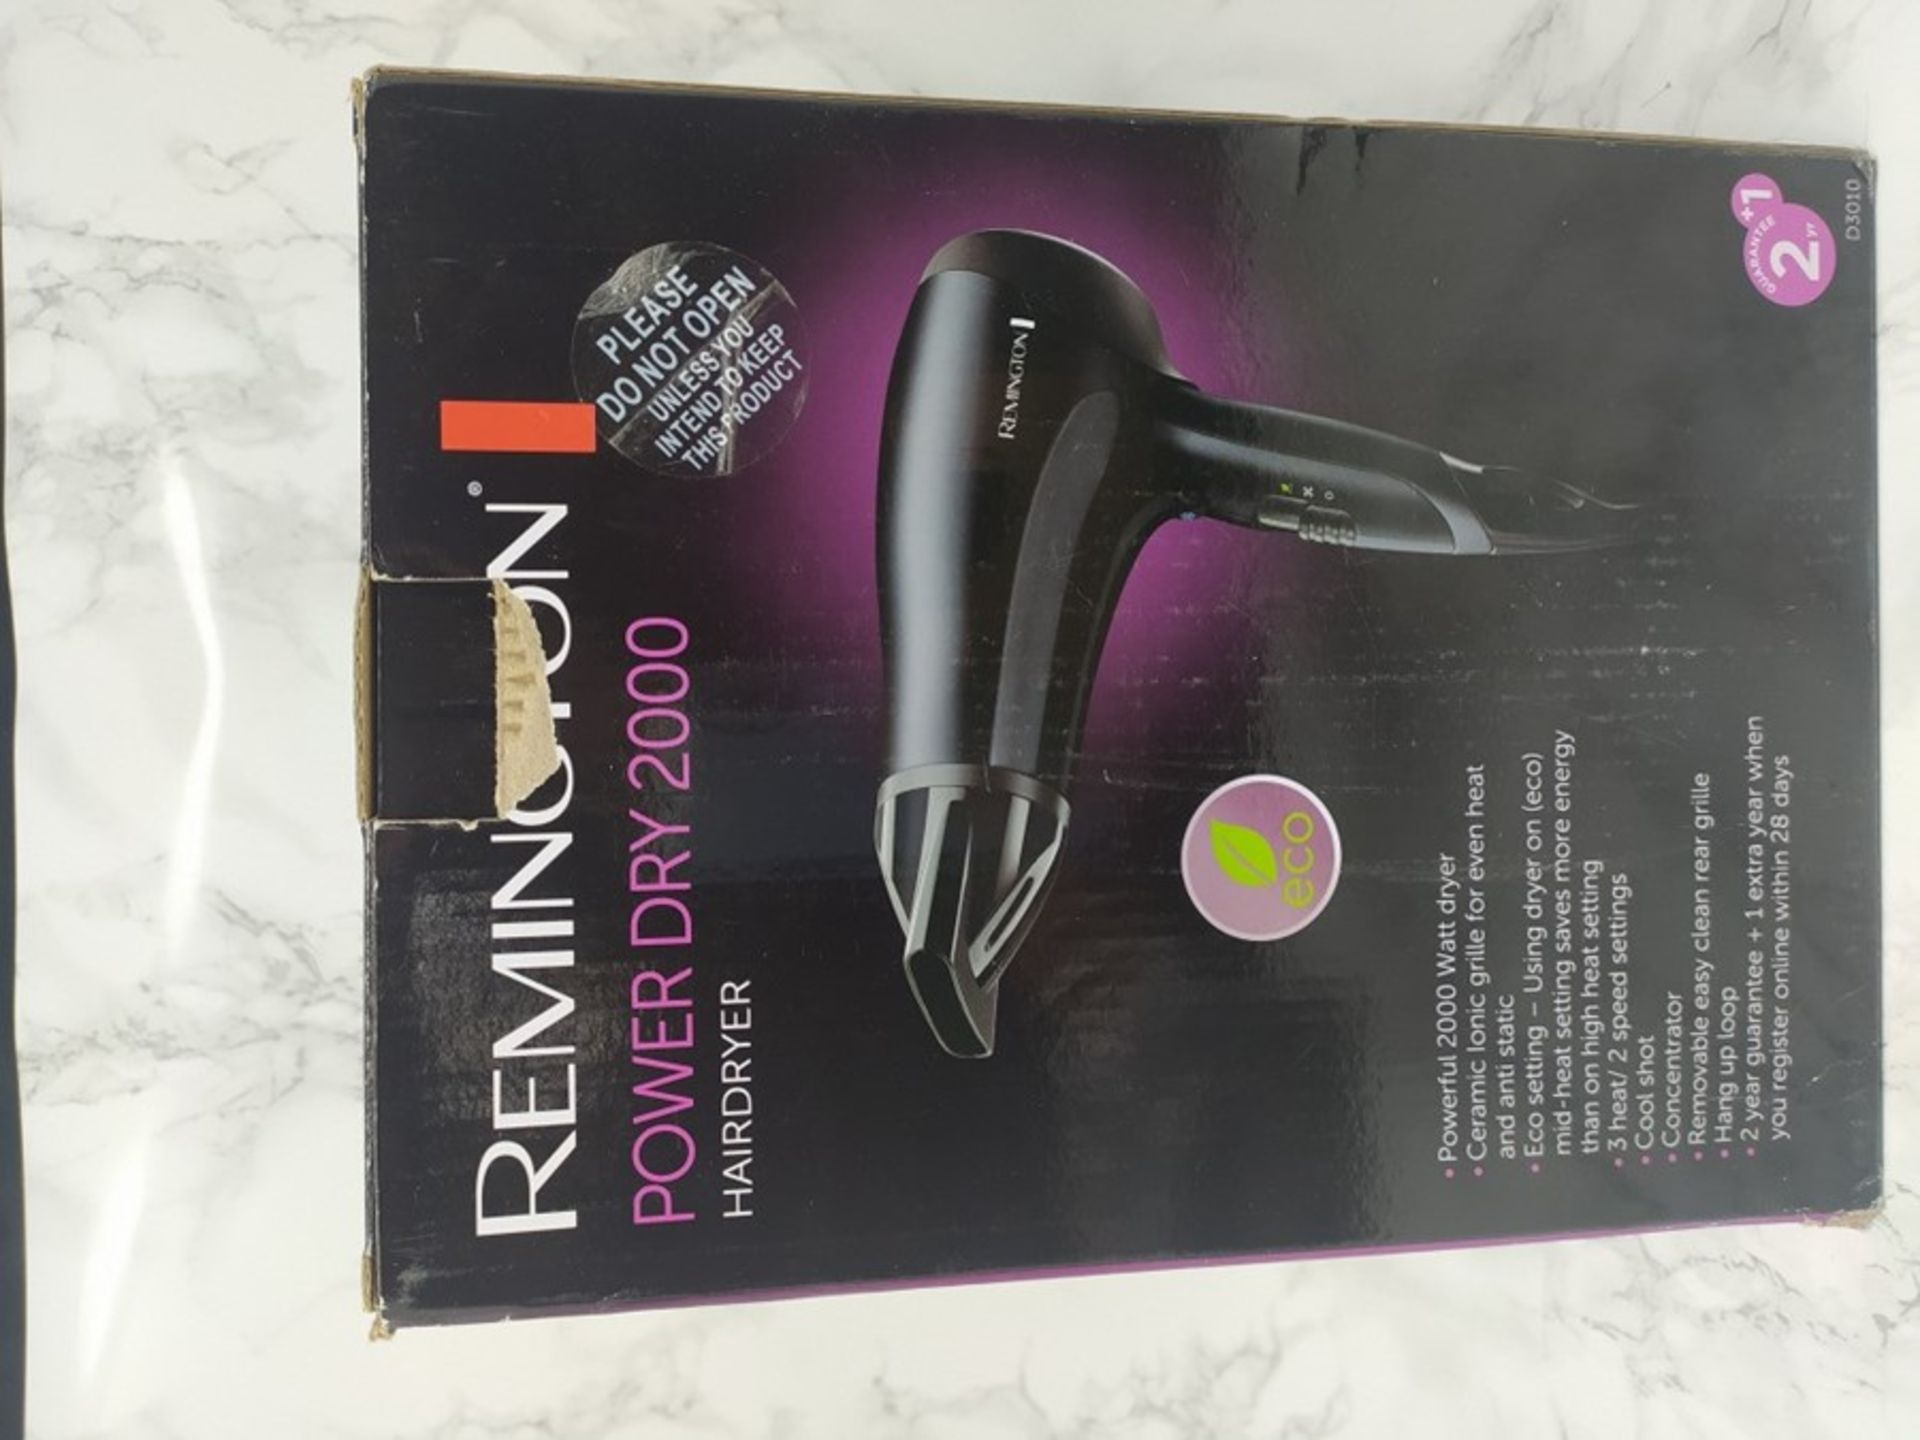 Remington D3010 Power Dry Lightweight Hair Dryer, 2000 W - Image 2 of 3